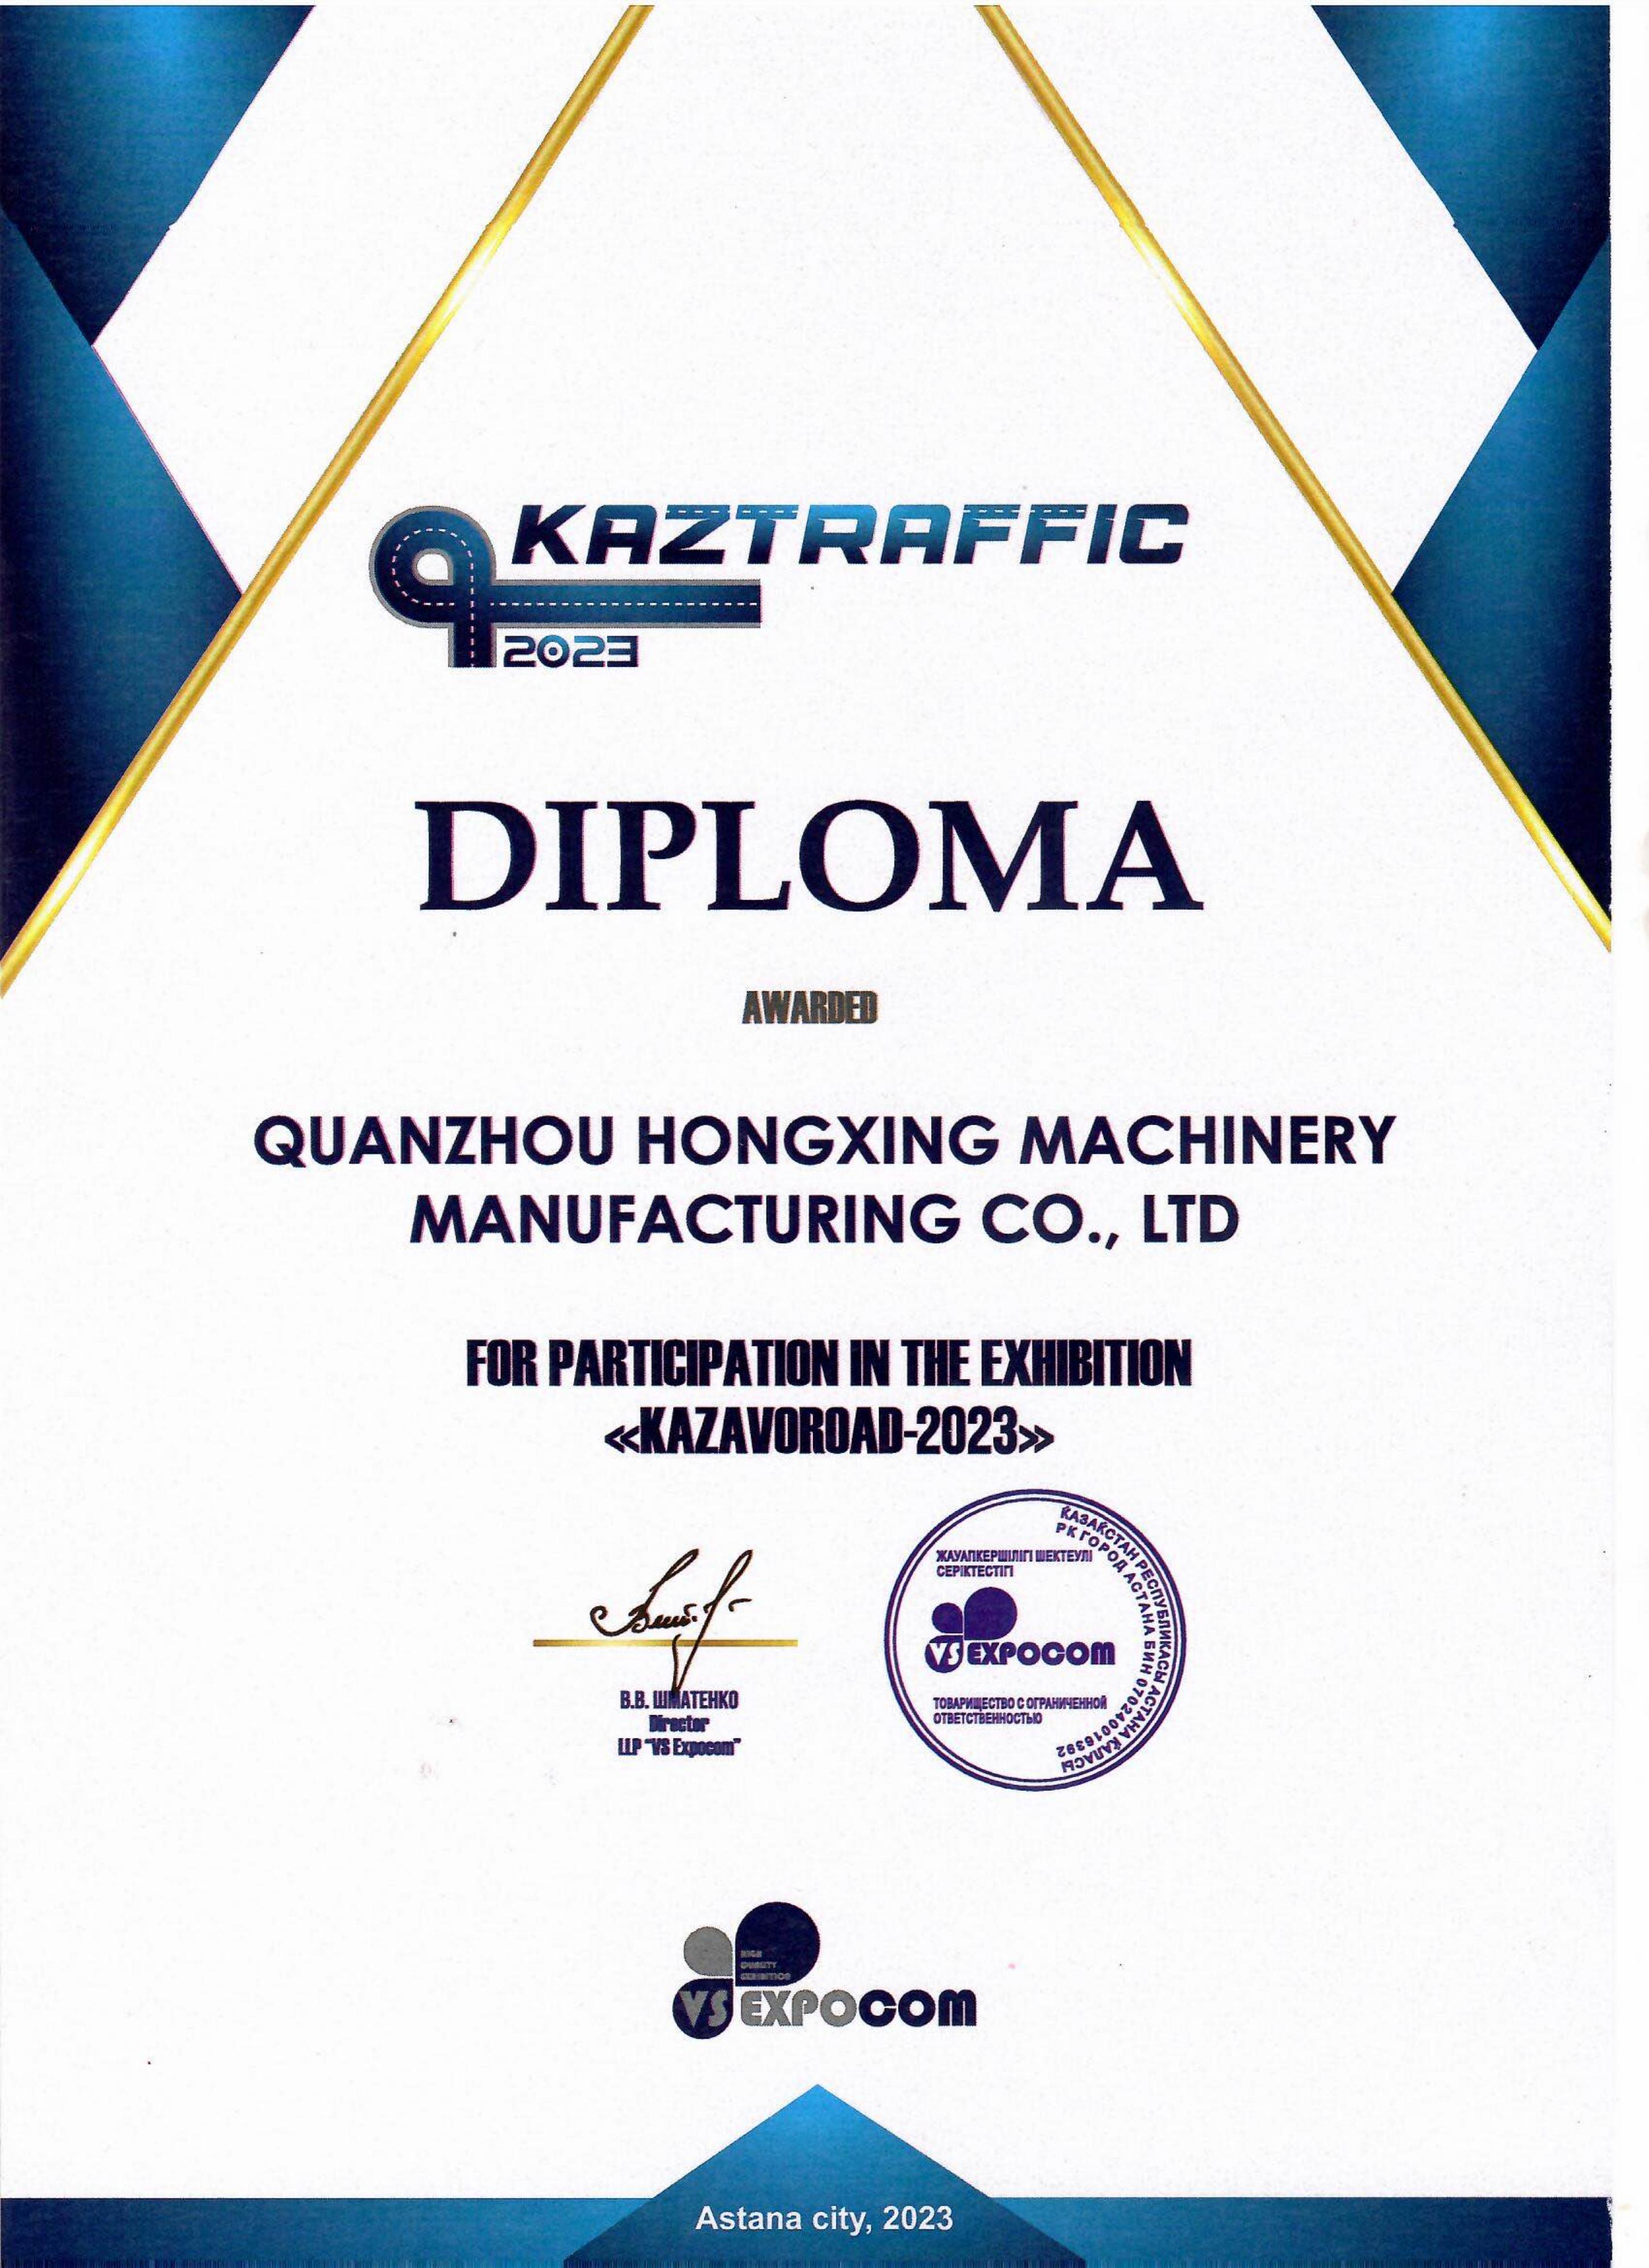 Quanzhou Xinhongxing Machinery Manufacturing Co., Ltd. was unveiled at the 19th Kazakhstan Transportation Exhibition in Kaztraffic 2023.